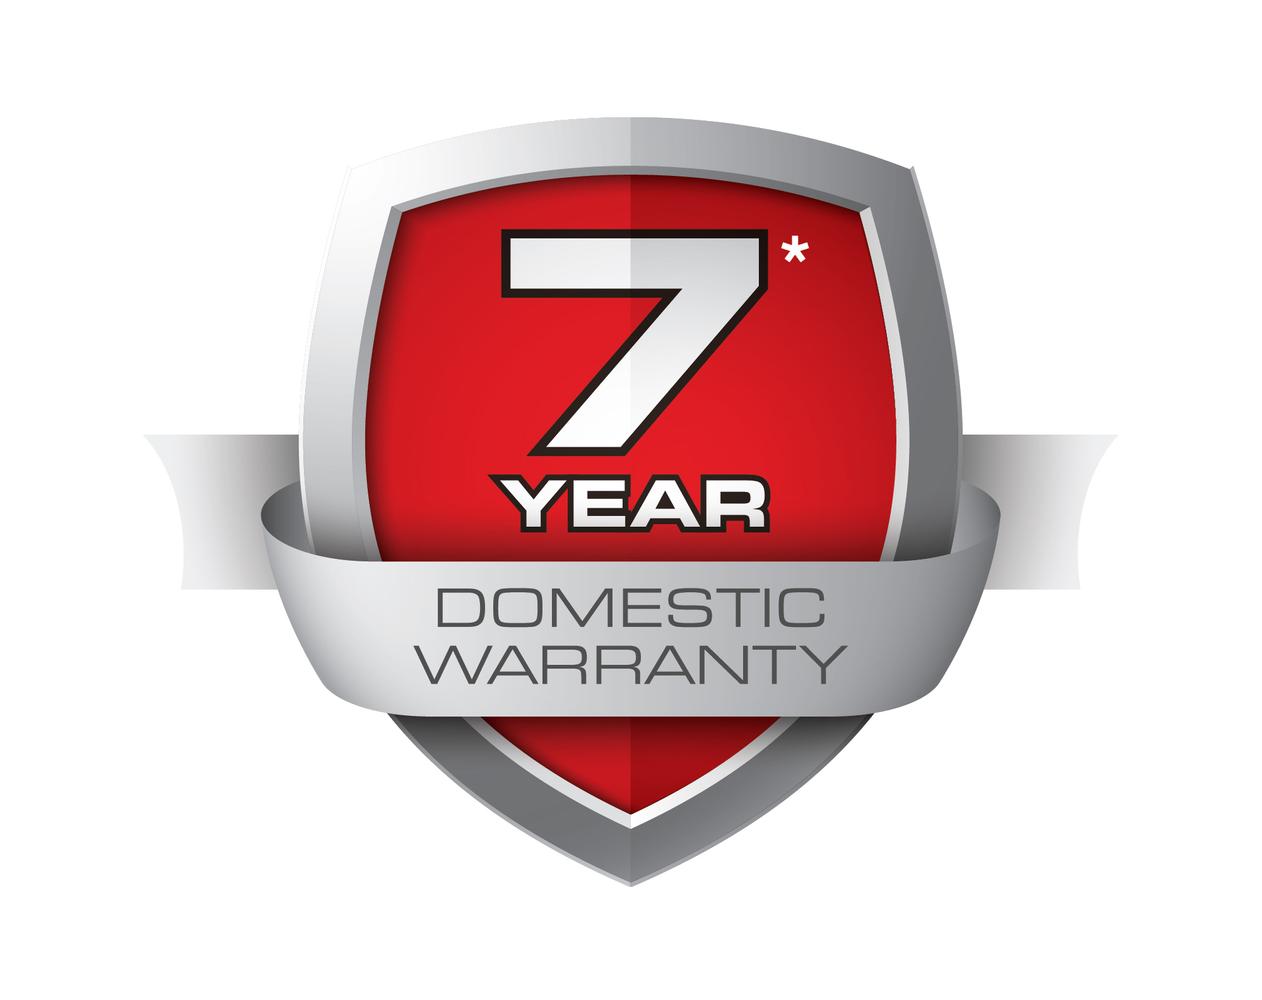 7 Year Domestic Warranty